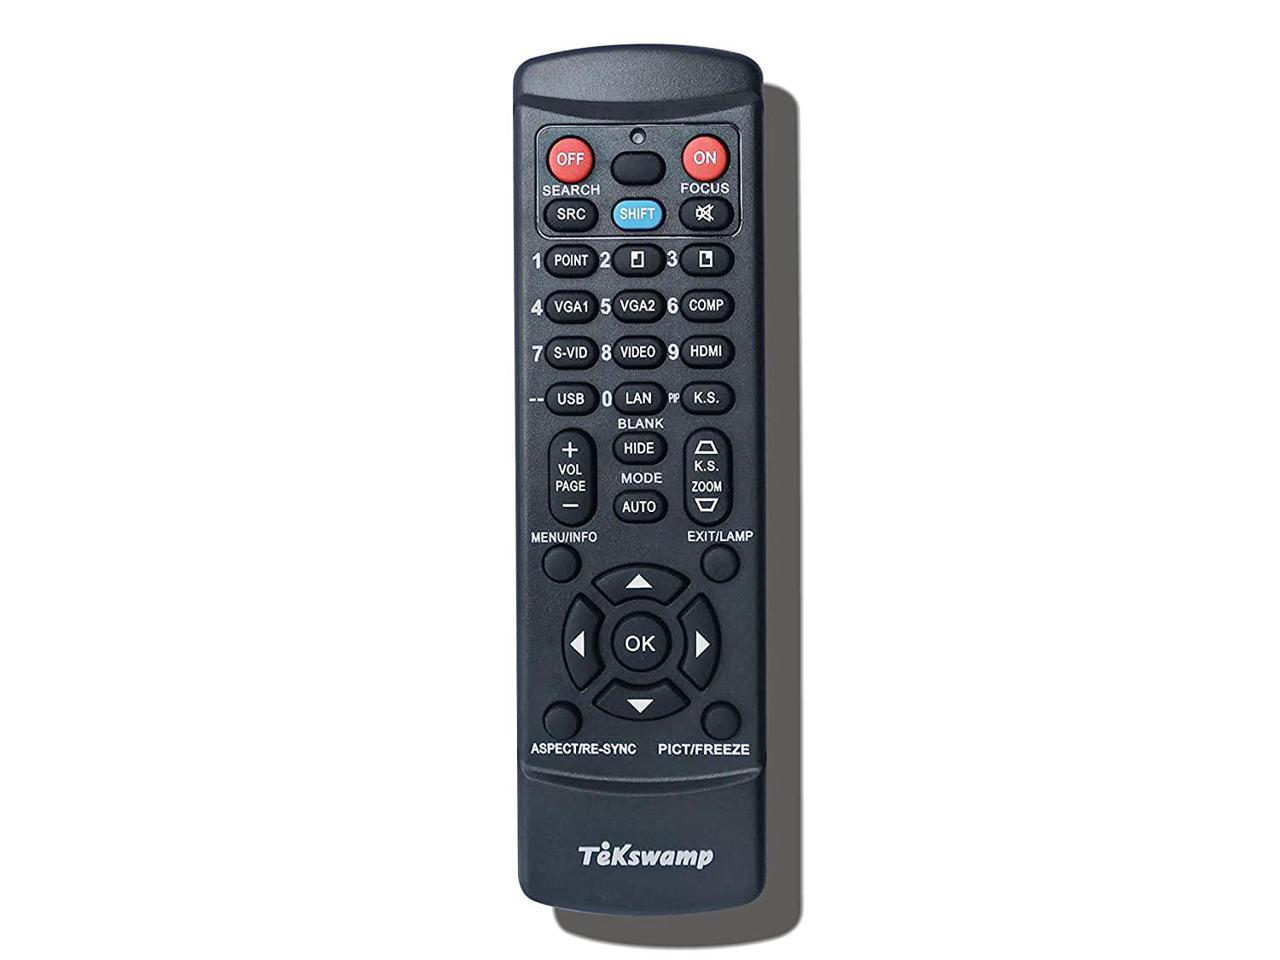 Black TeKswamp Video Projector Remote Control for ViewSonic PJ503D 